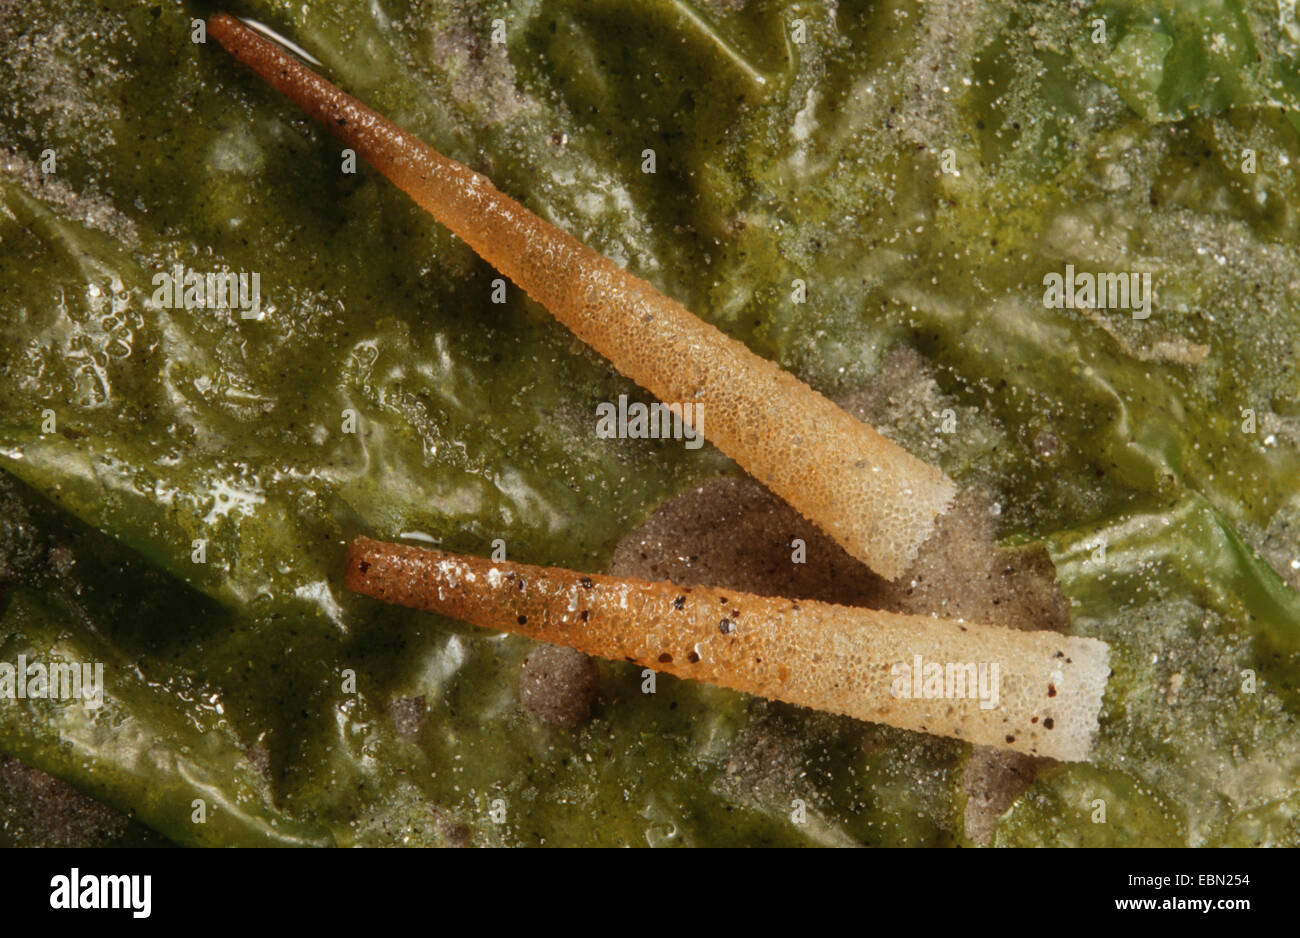 Trumpet Worm (Lagis koreni, Amphictene koreni, Pectinaria koreni) Stock Photo